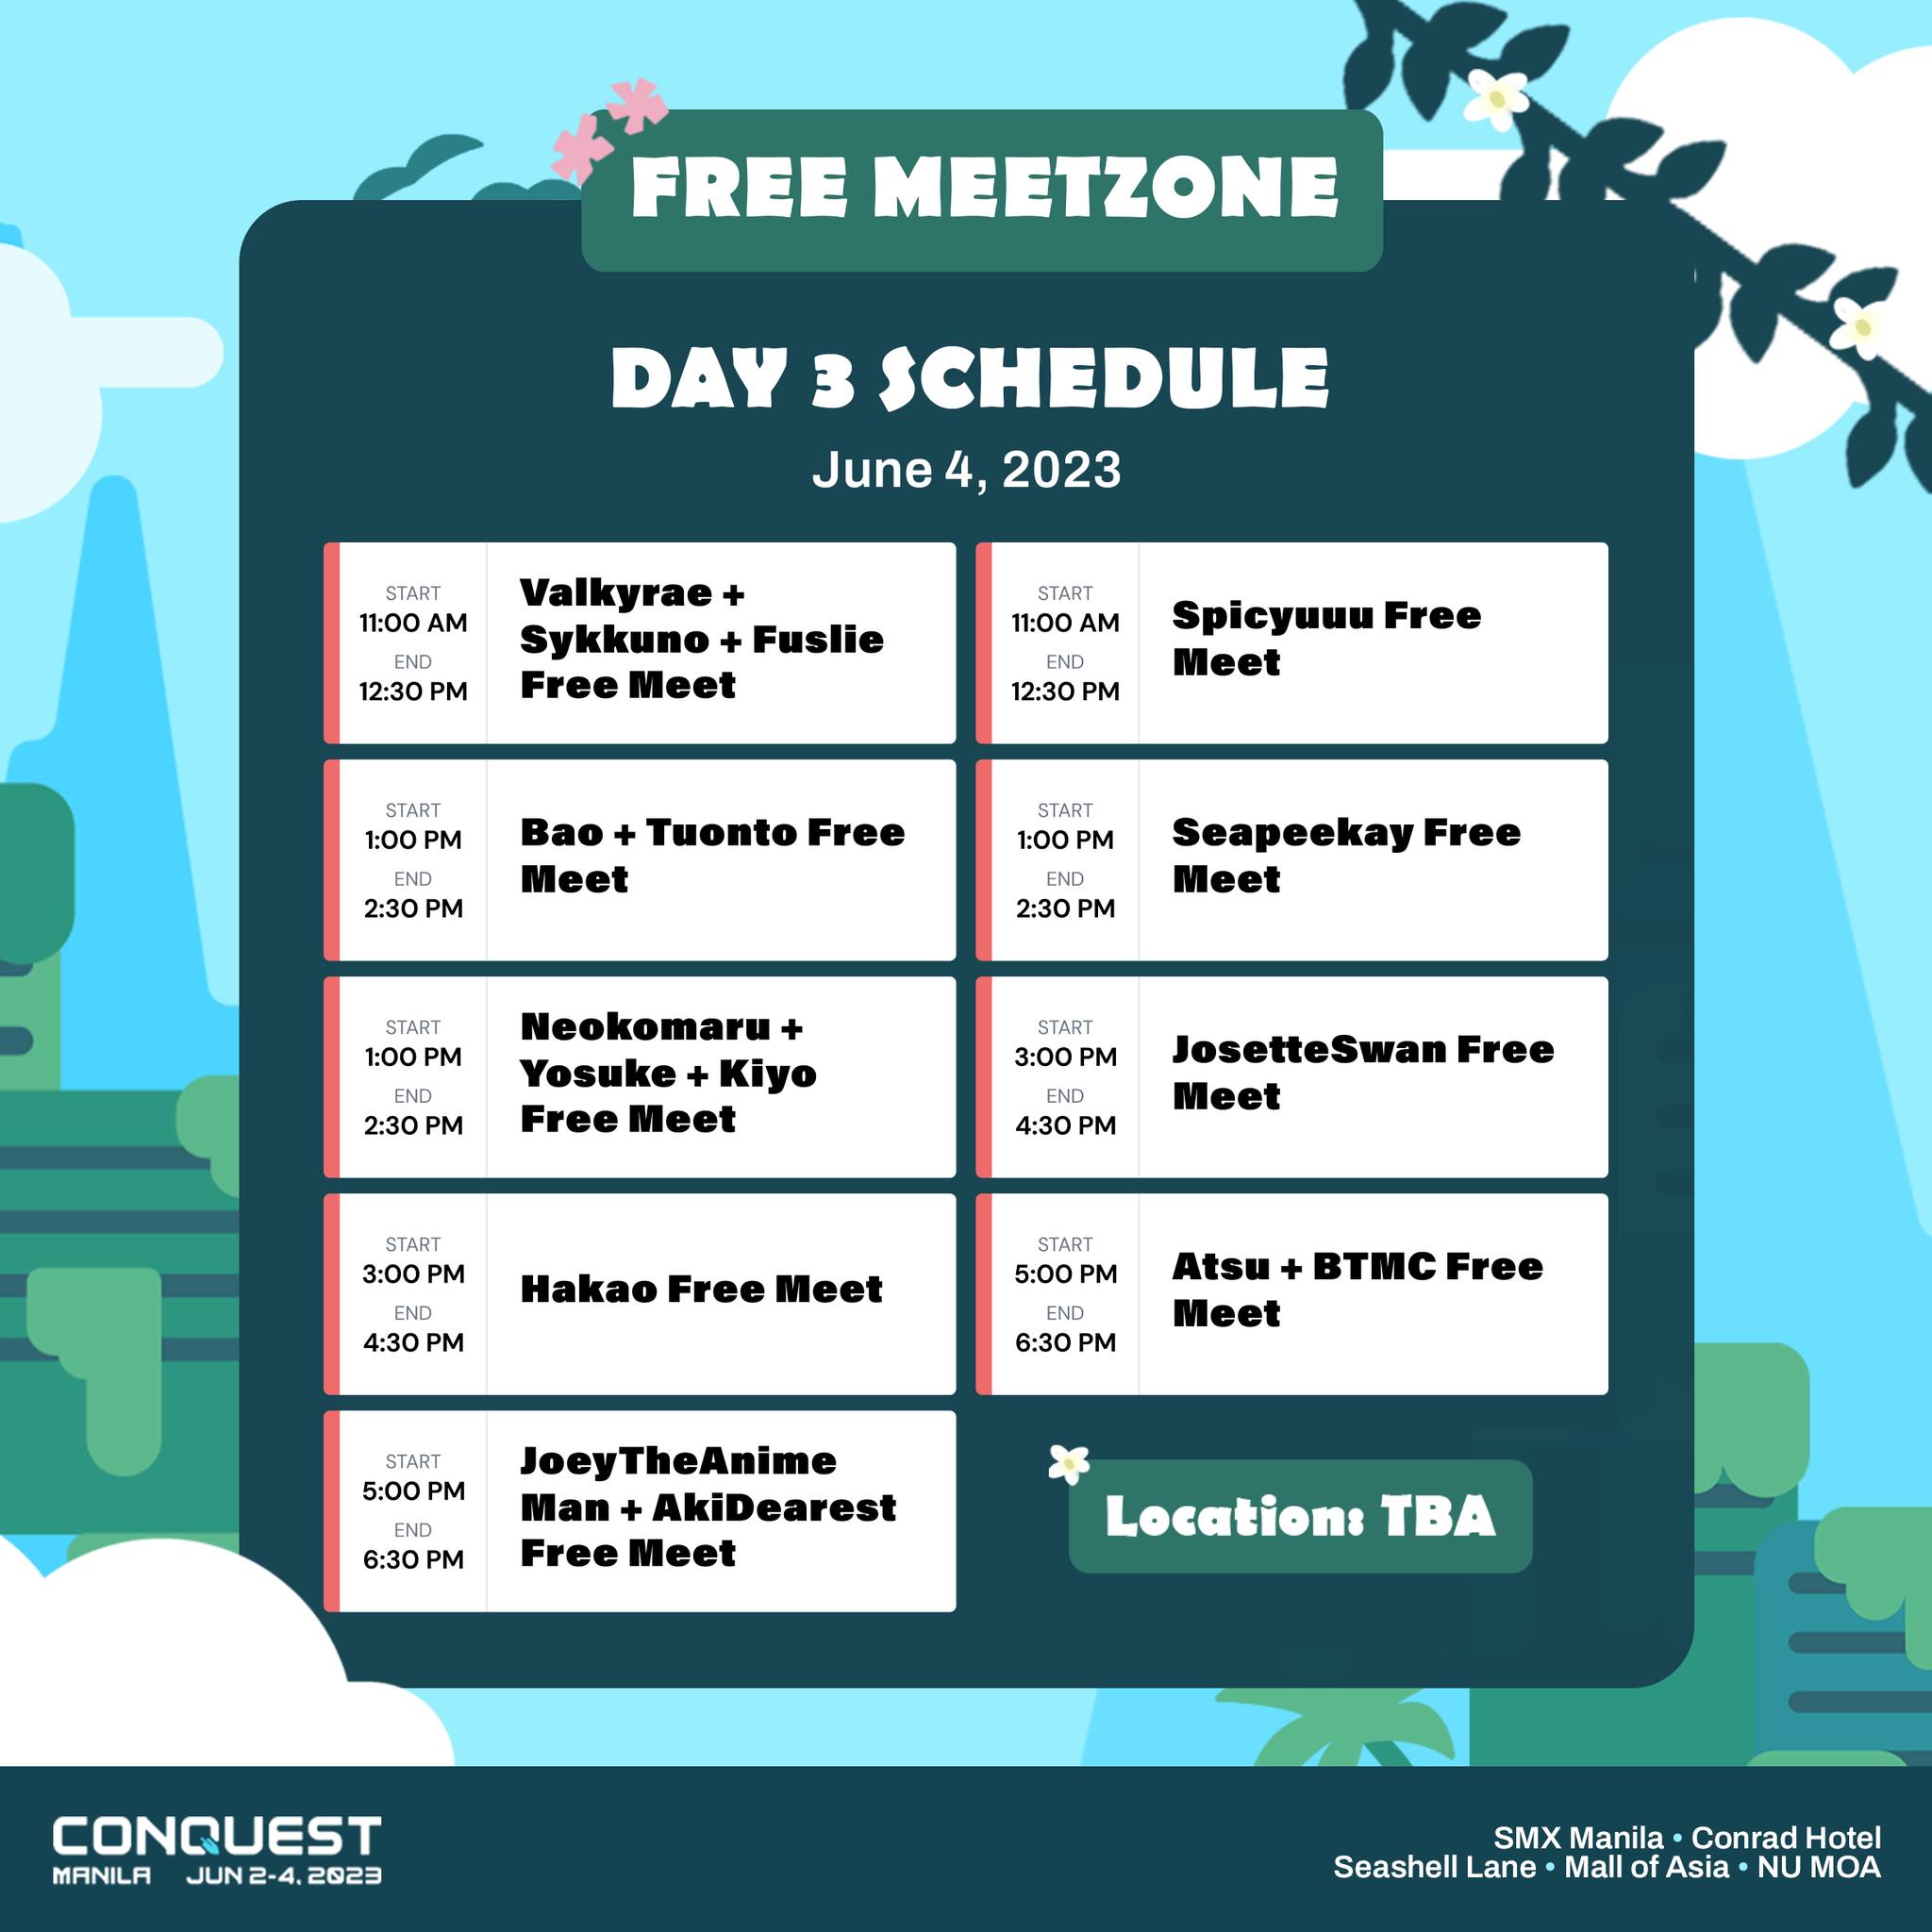 Conquest Festival 2023 Guide meetzone